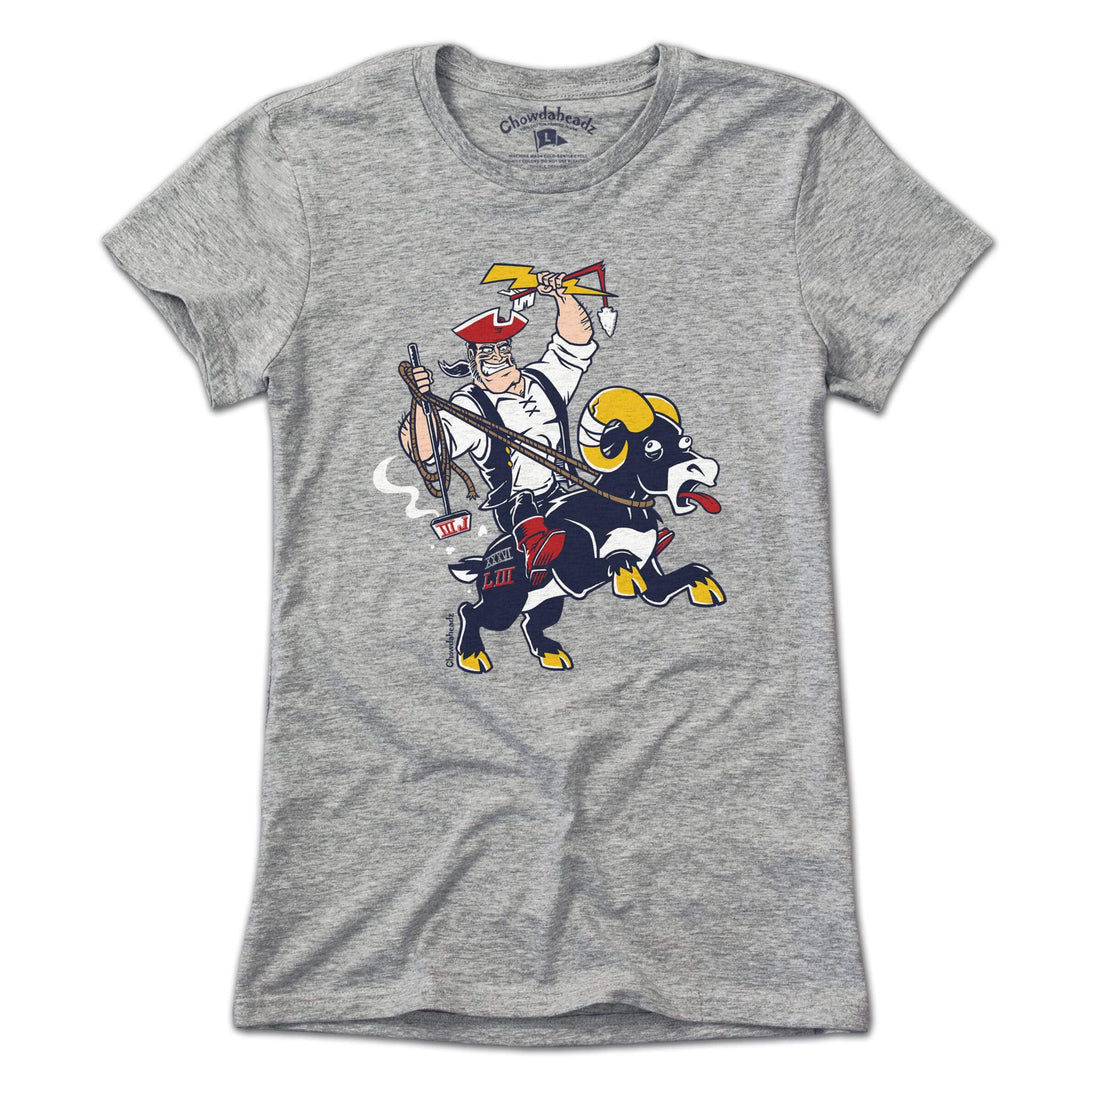 New England Victory Ride T-Shirt - Chowdaheadz